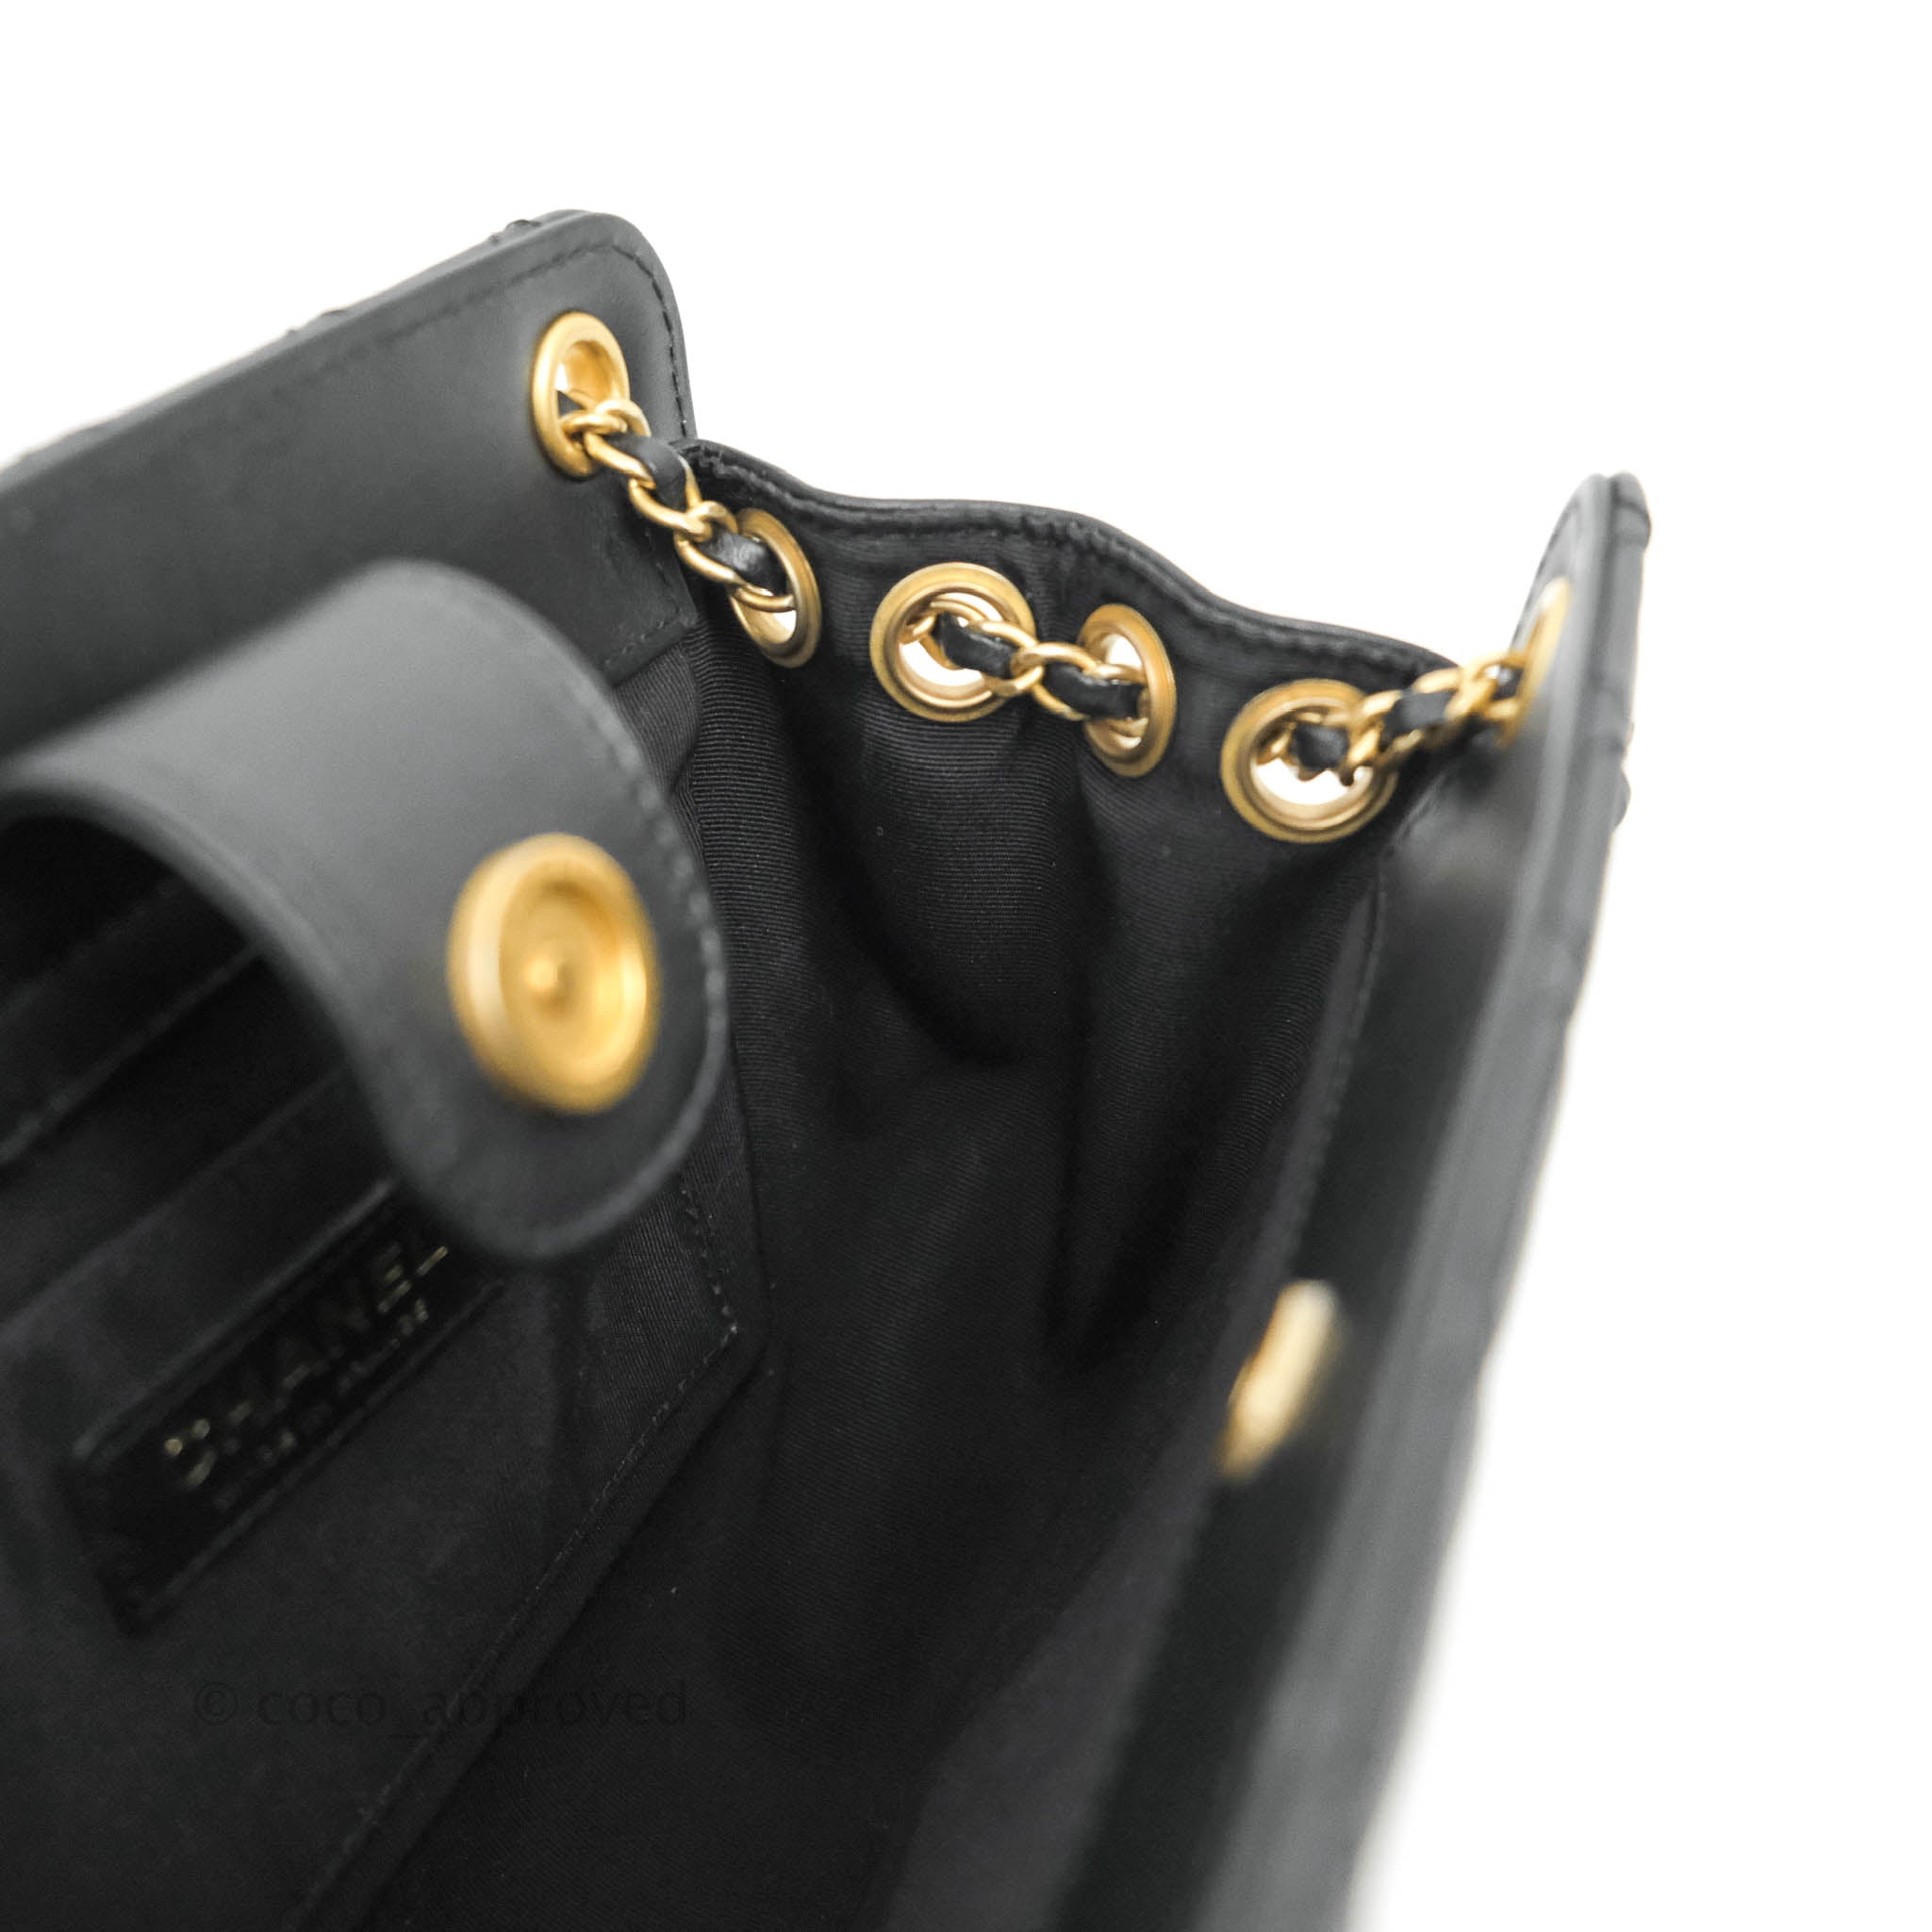 Chanel Small Accordion Tote Bag Black Calfskin Gold Hardware – Coco  Approved Studio